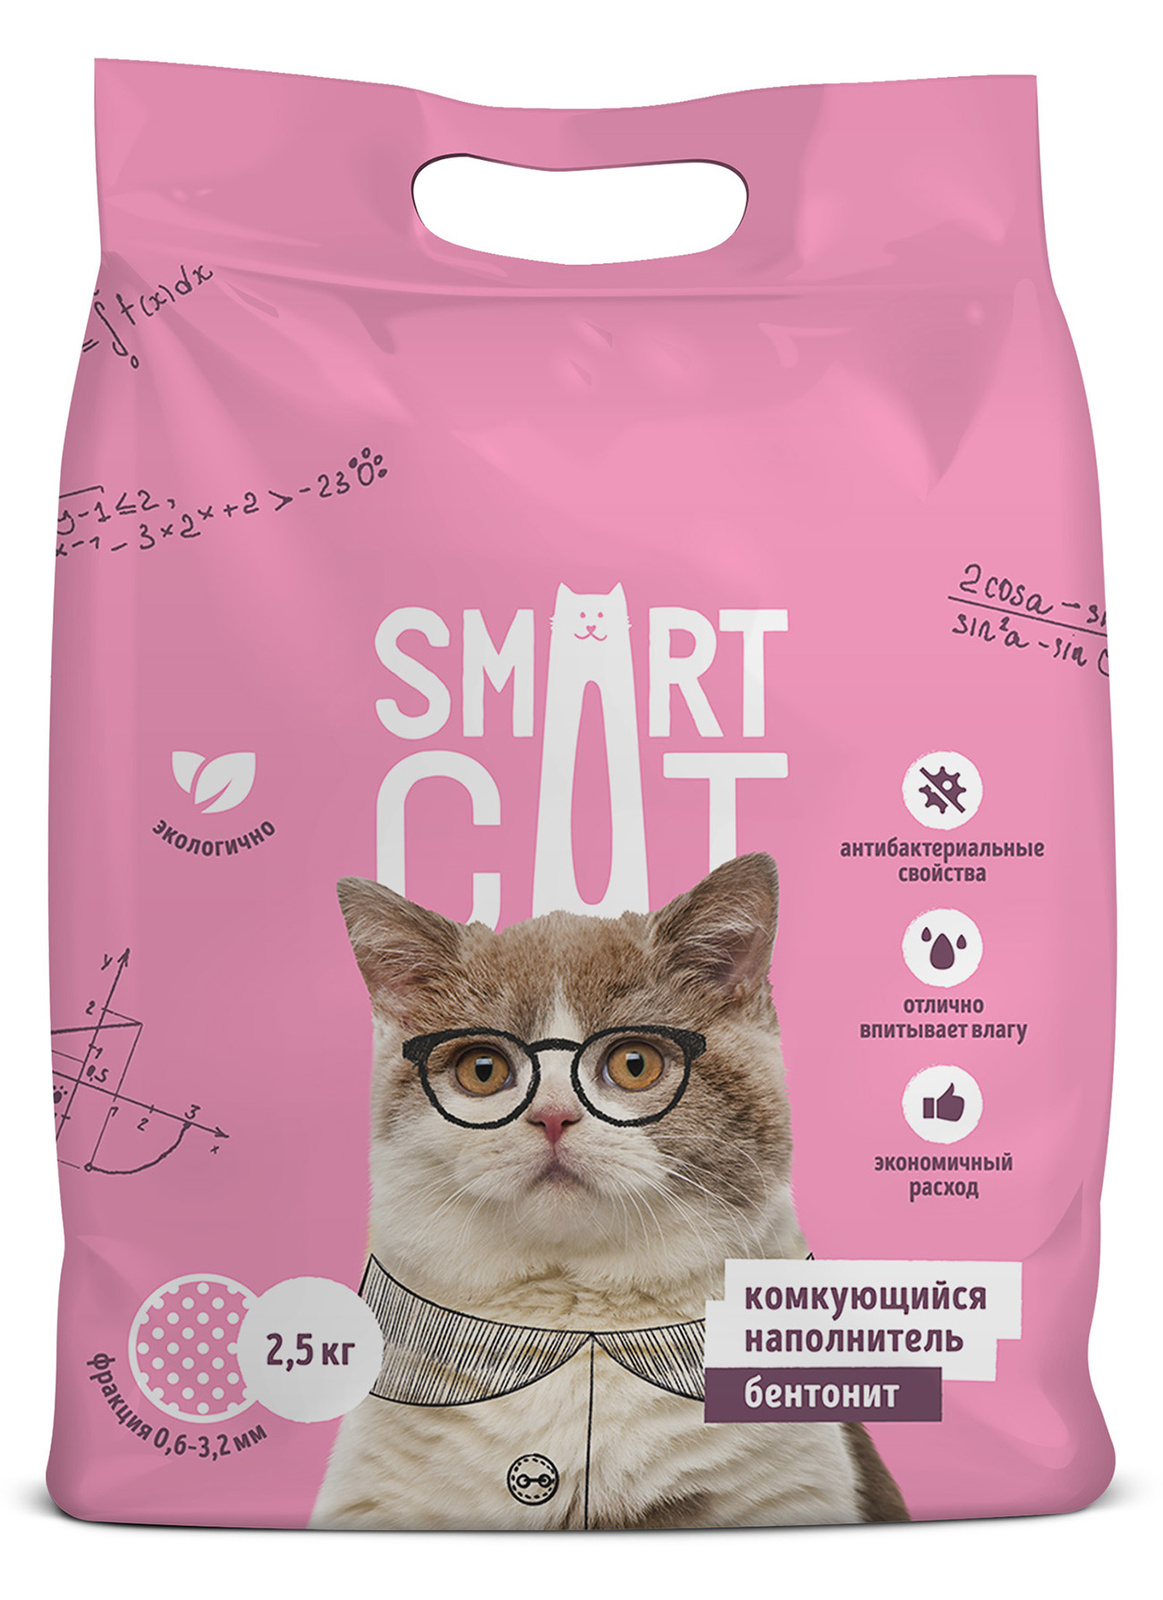 Smart Cat наполнитель комкующийся наполнитель (2,5 кг)